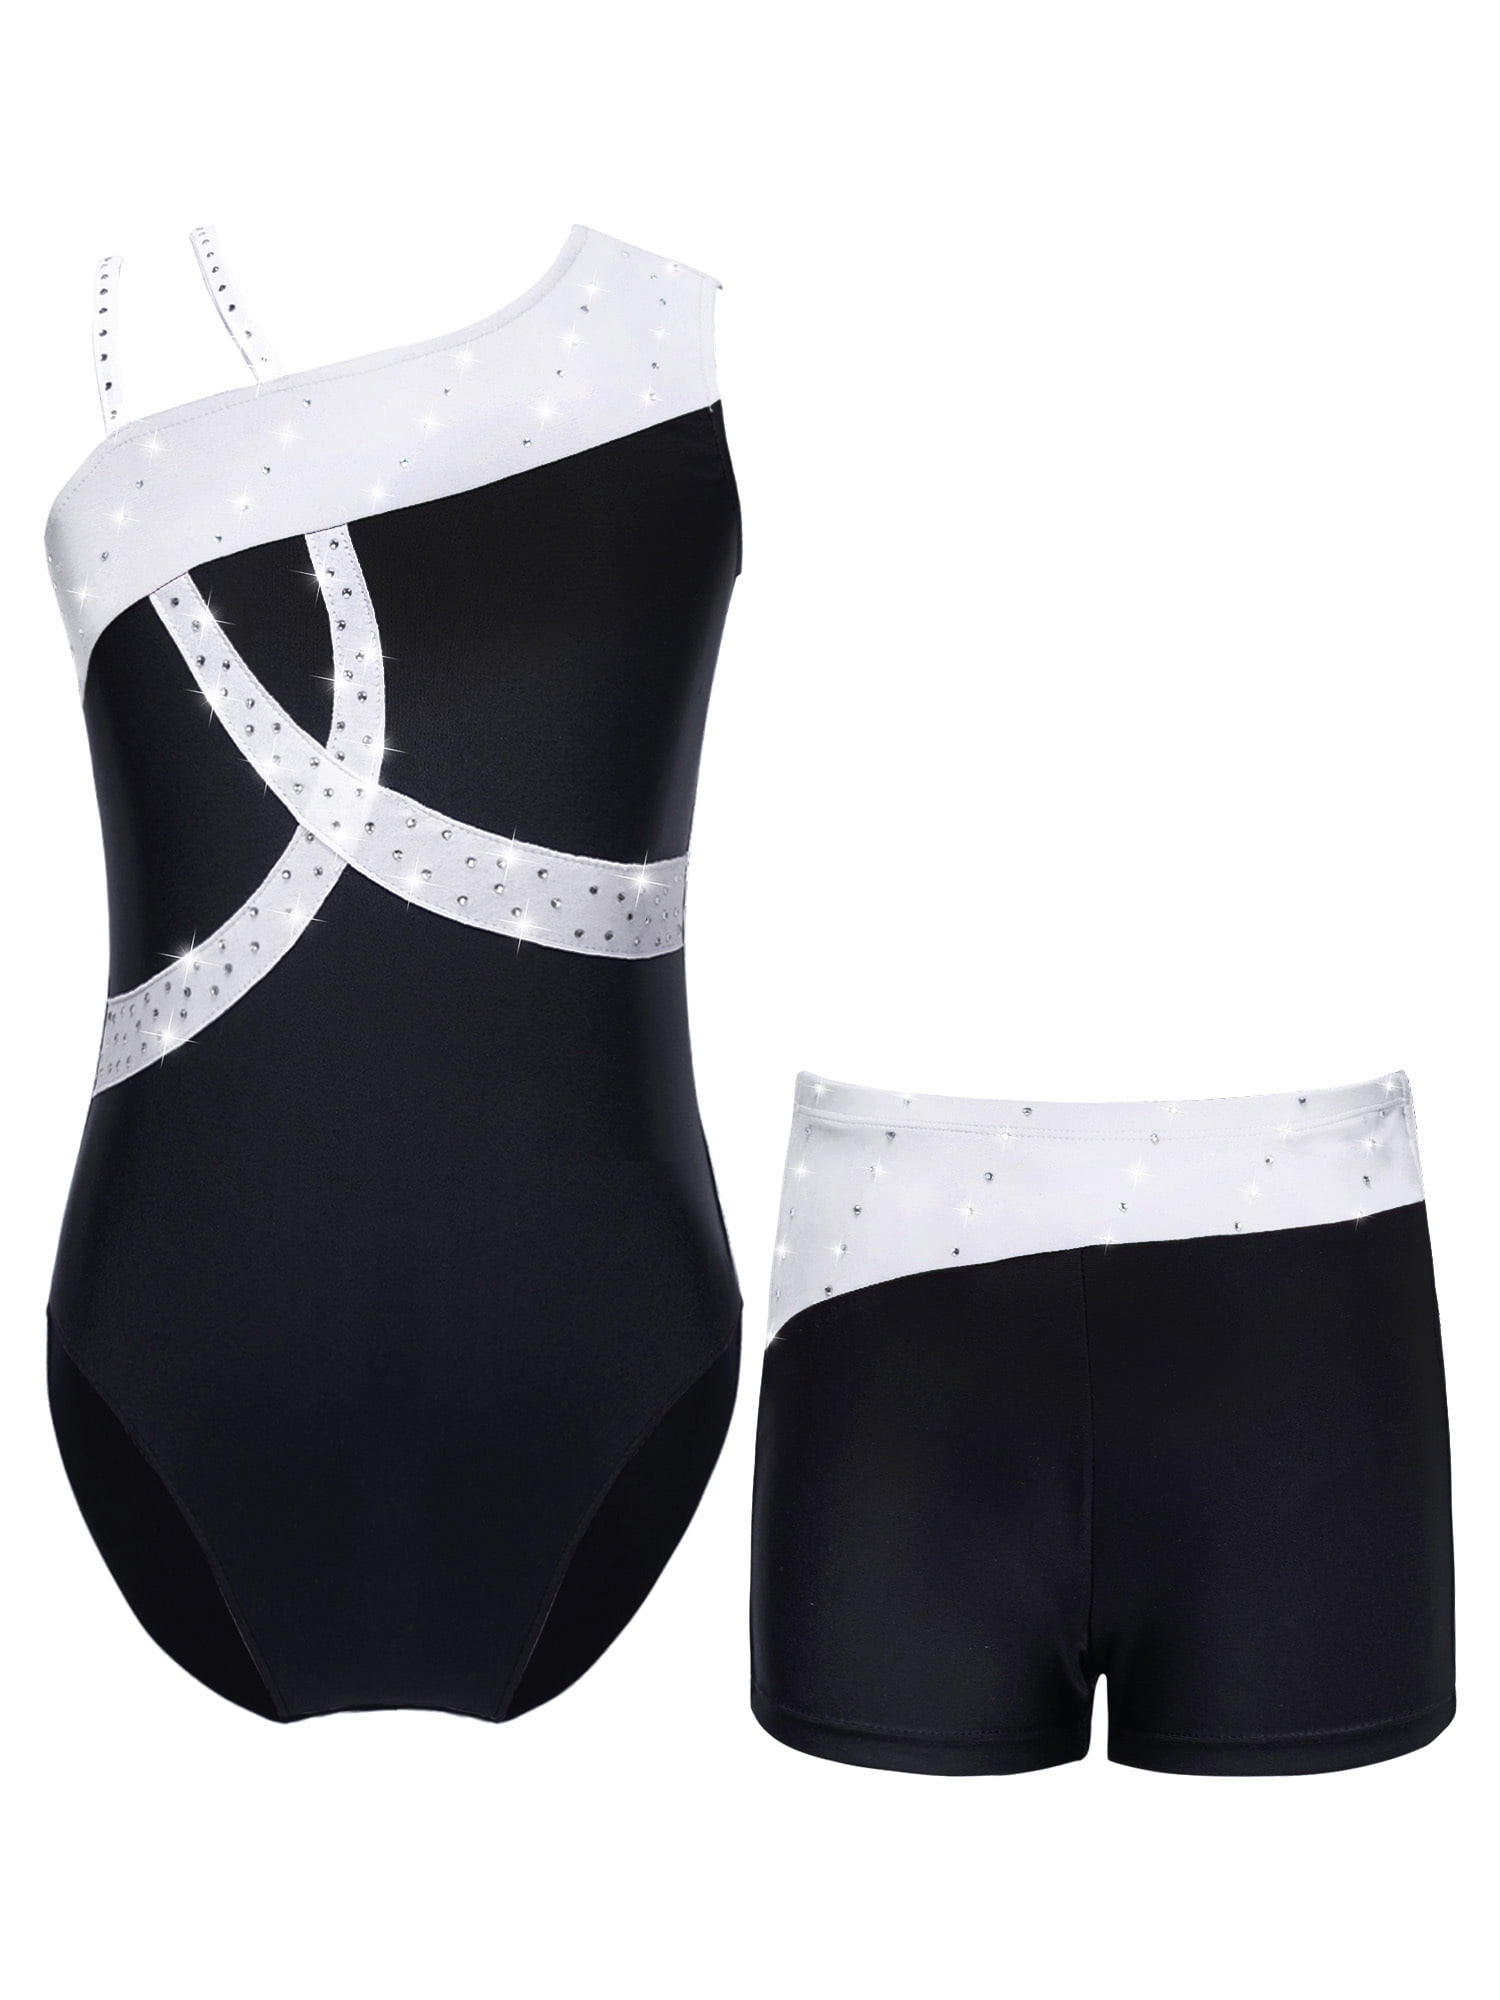 YONGHS Kids Girls Professional Ballet Dance Briefs High Leg Cut Cotton  Gymnastic Underwear Underpants 2-3 Nude